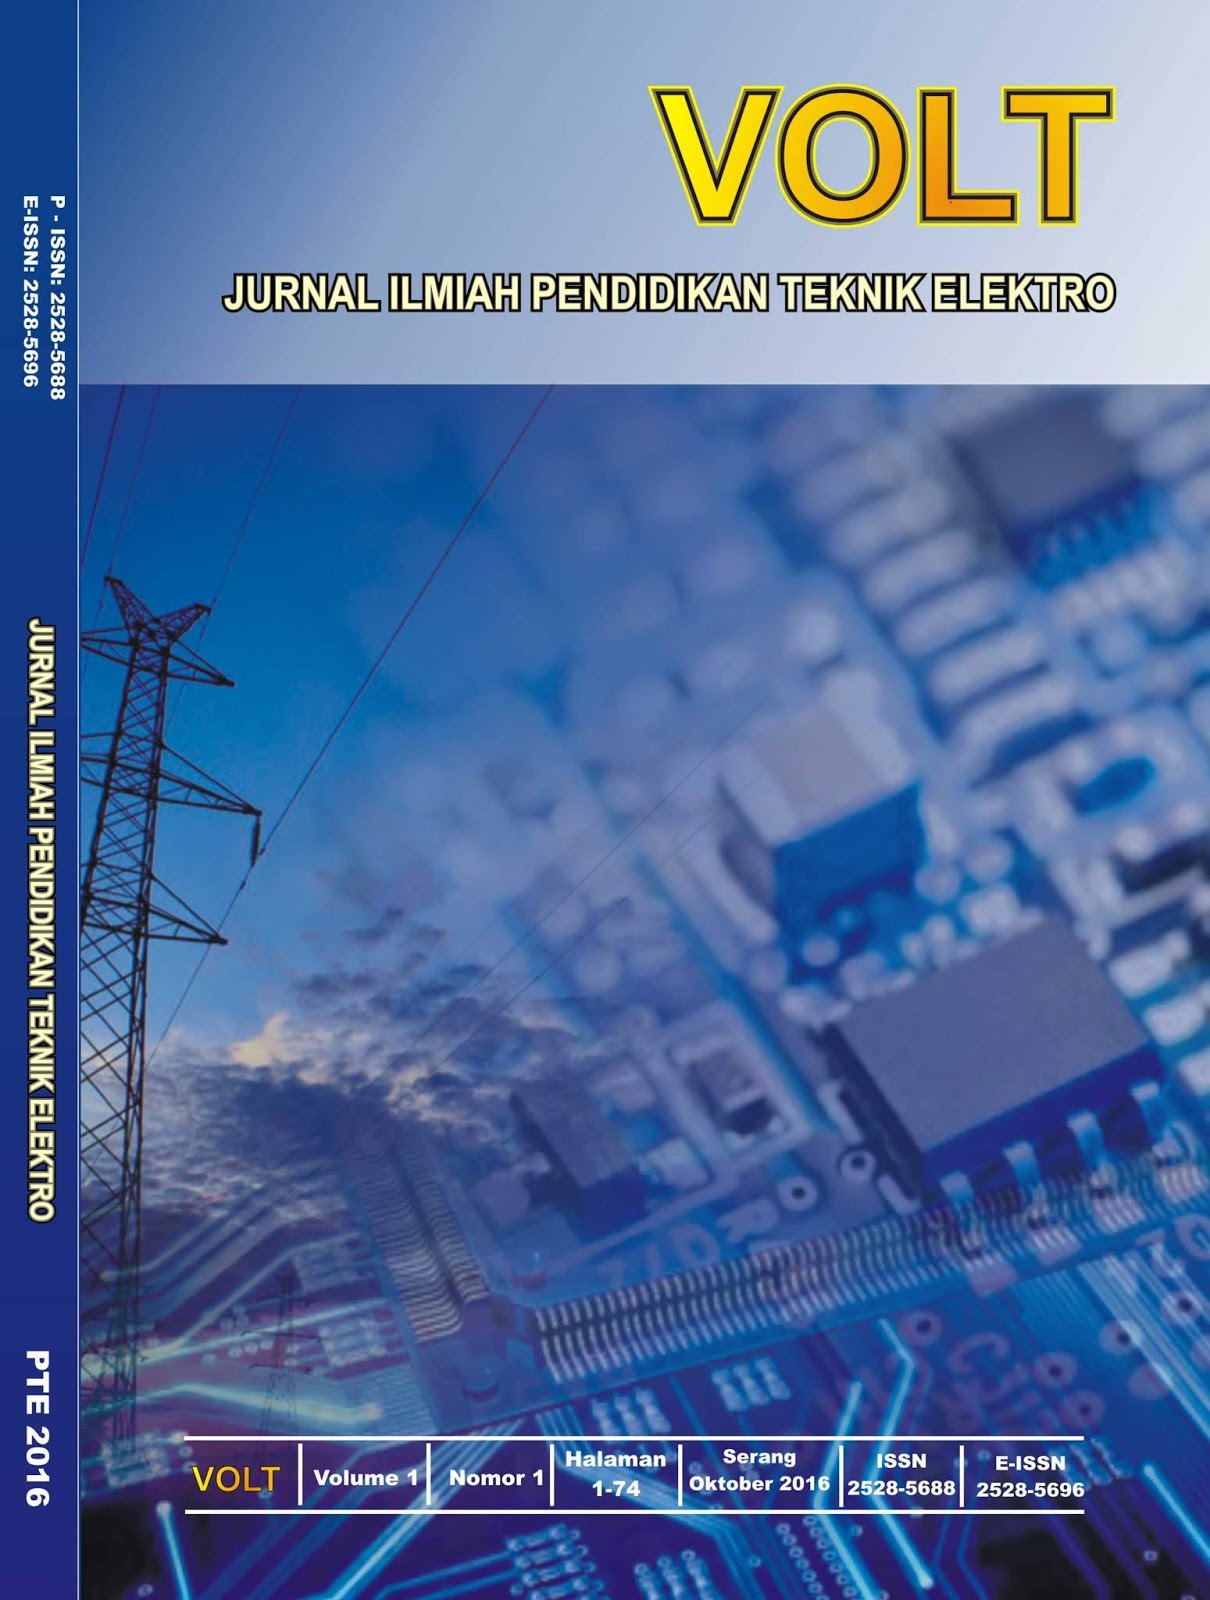 Journal VOLT Jurnal Ilmiah Pendidikan Teknik Elektro